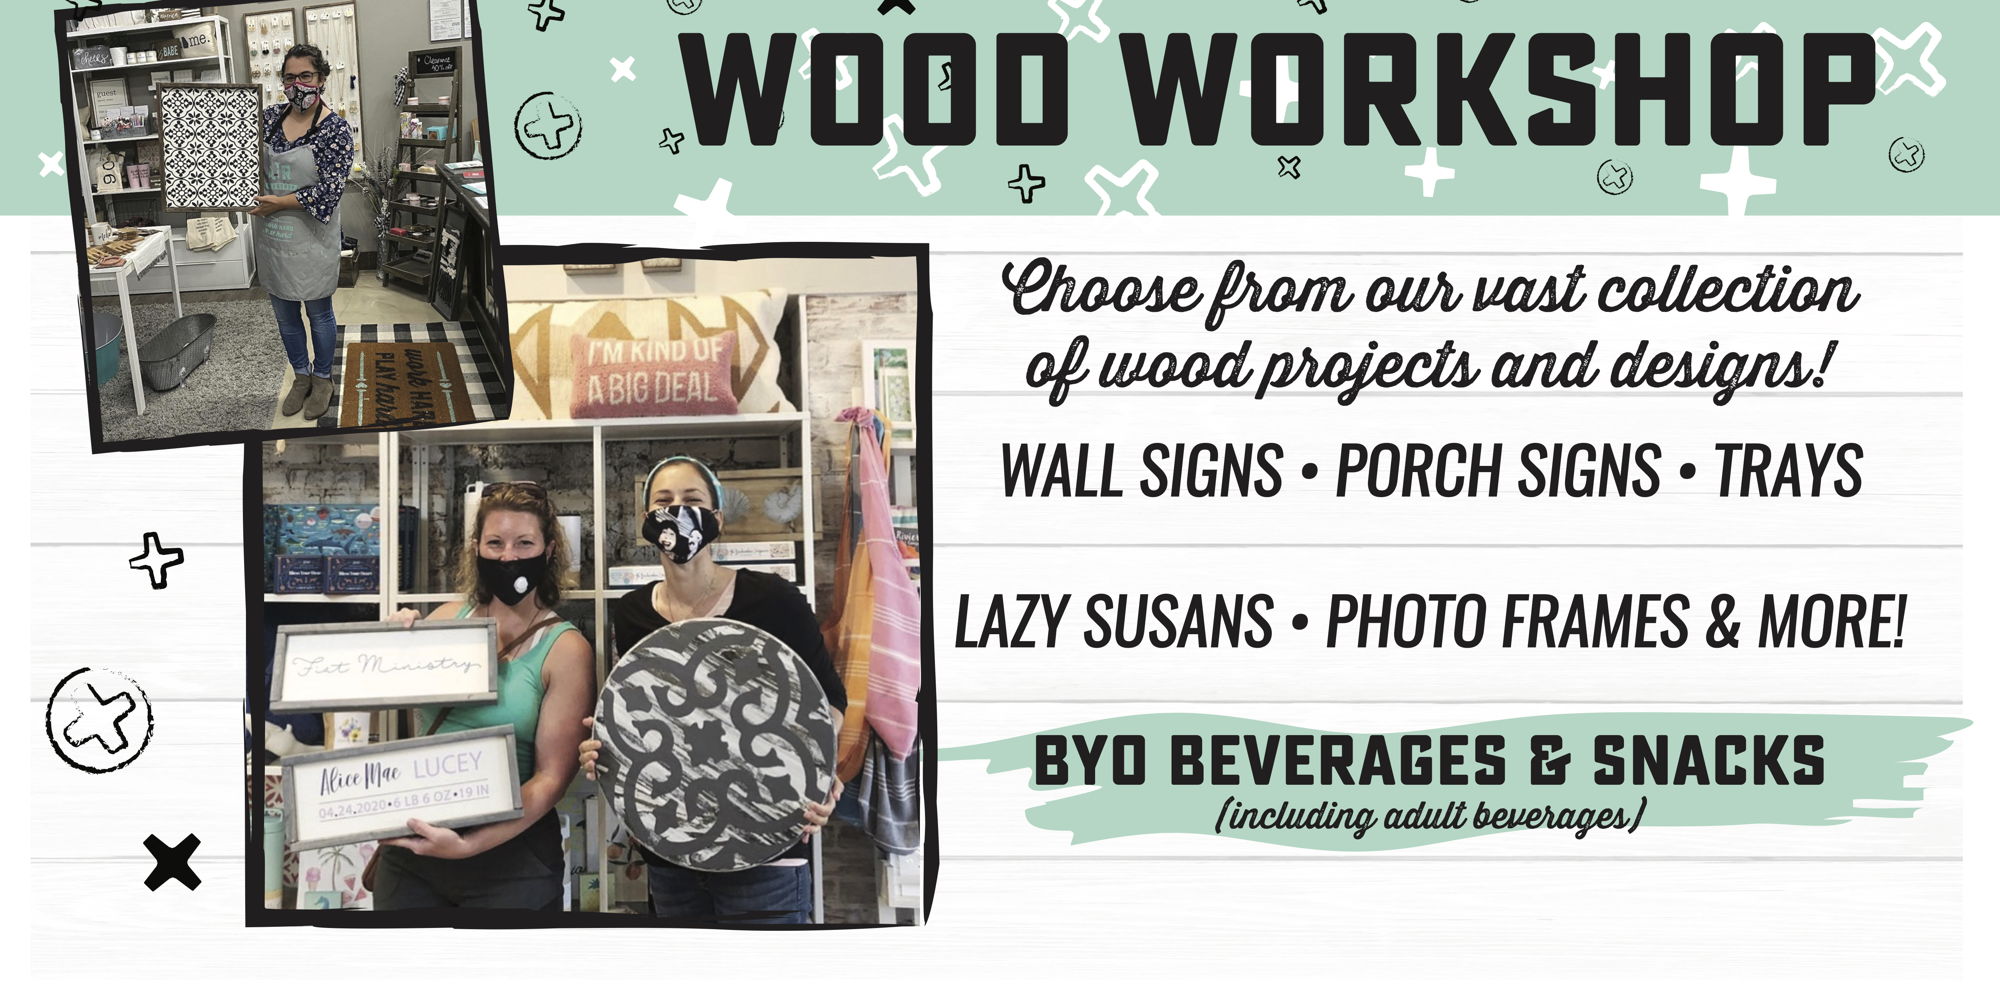 Satur-DIY Wood Workshop! promotional image